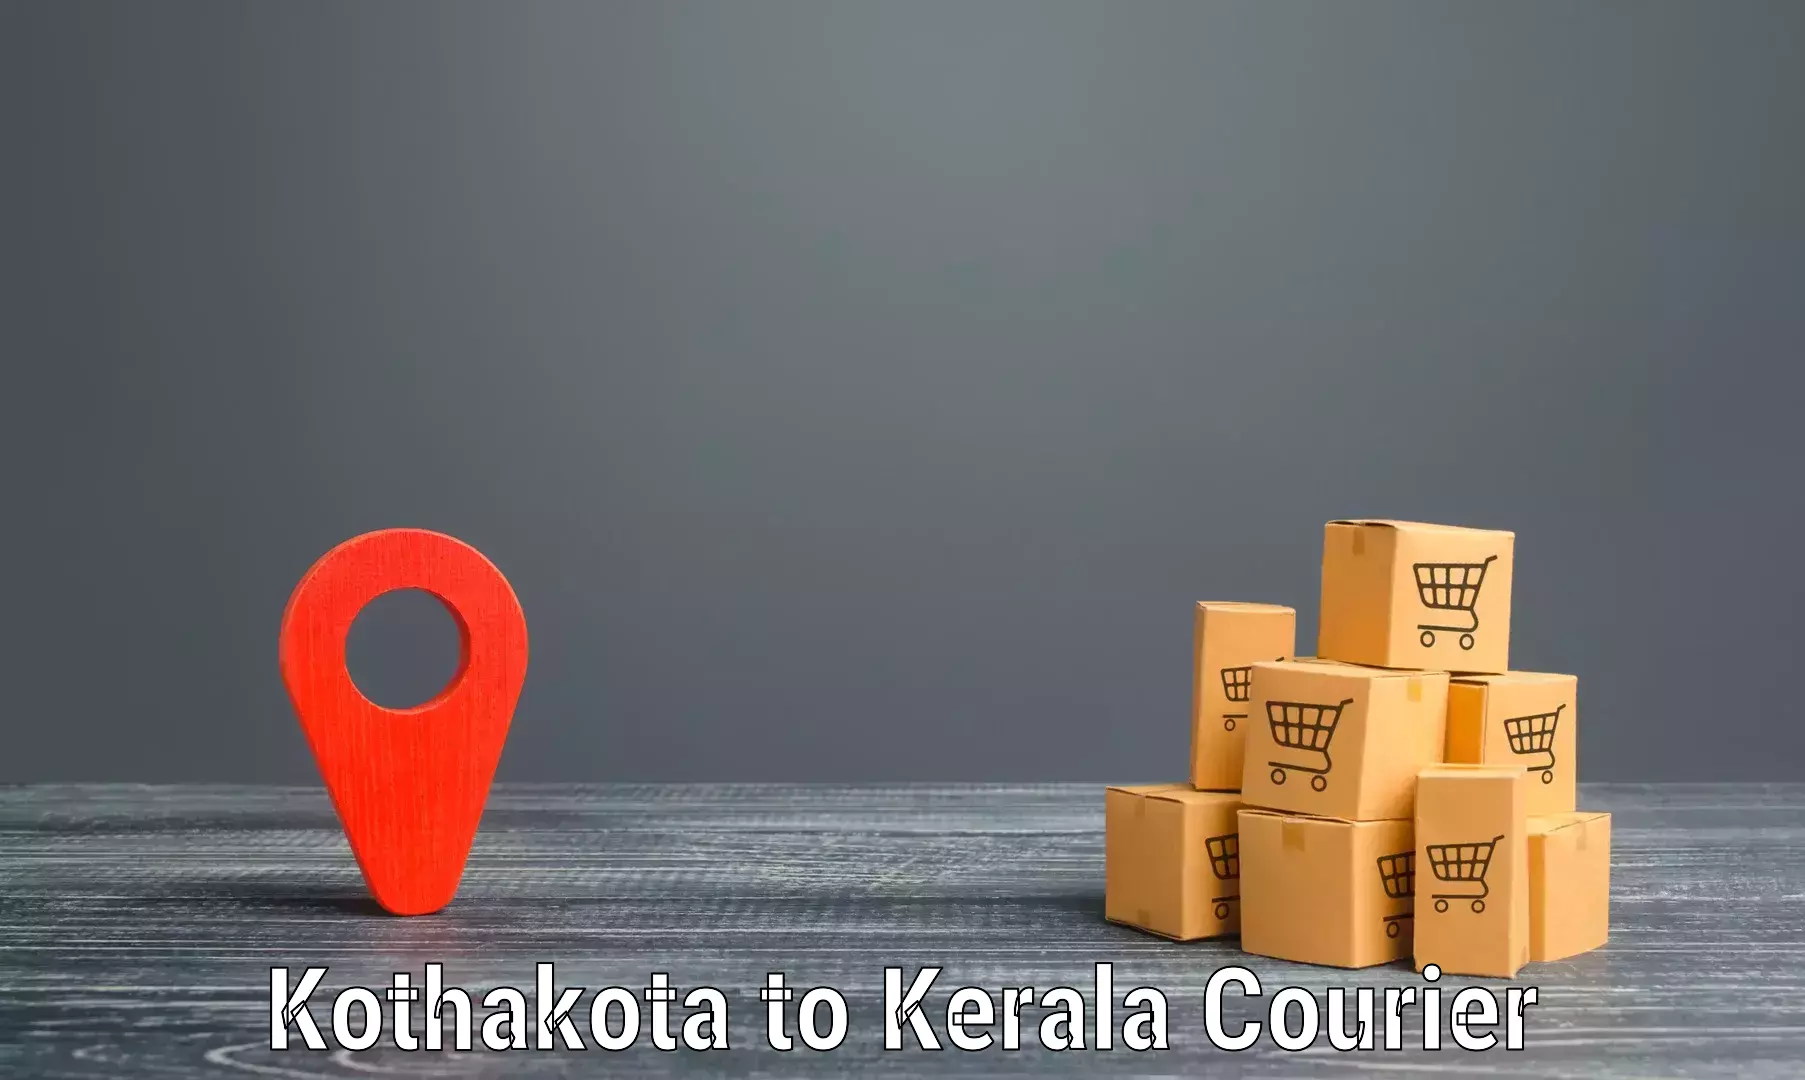 Advanced shipping network Kothakota to Cochin